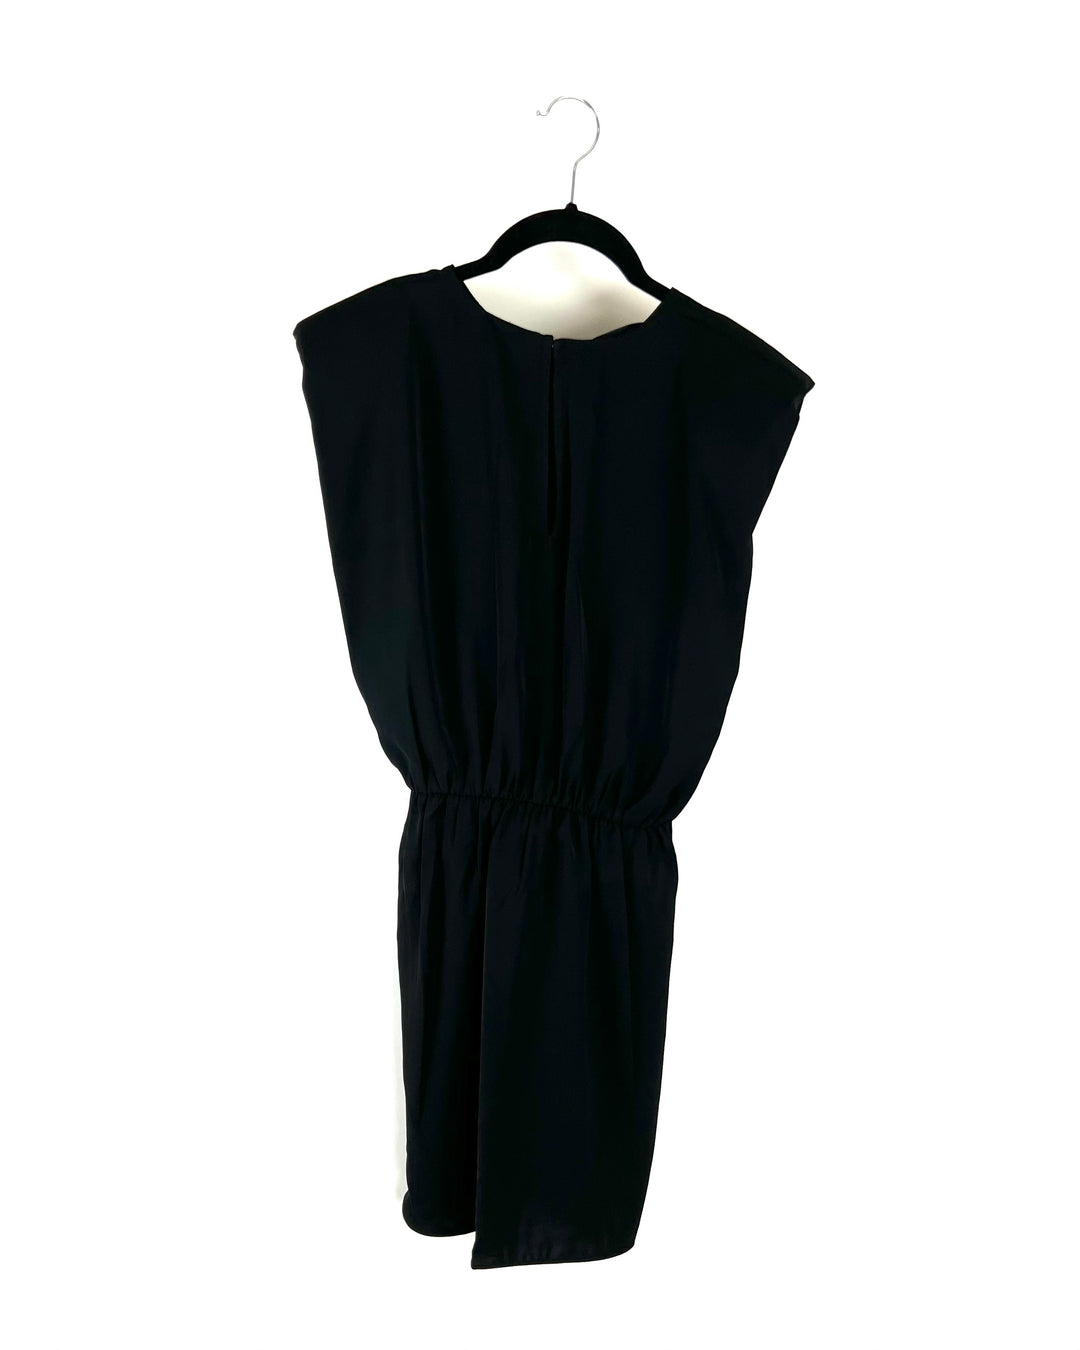 Black Dress - Extra Small, Small, And Medium